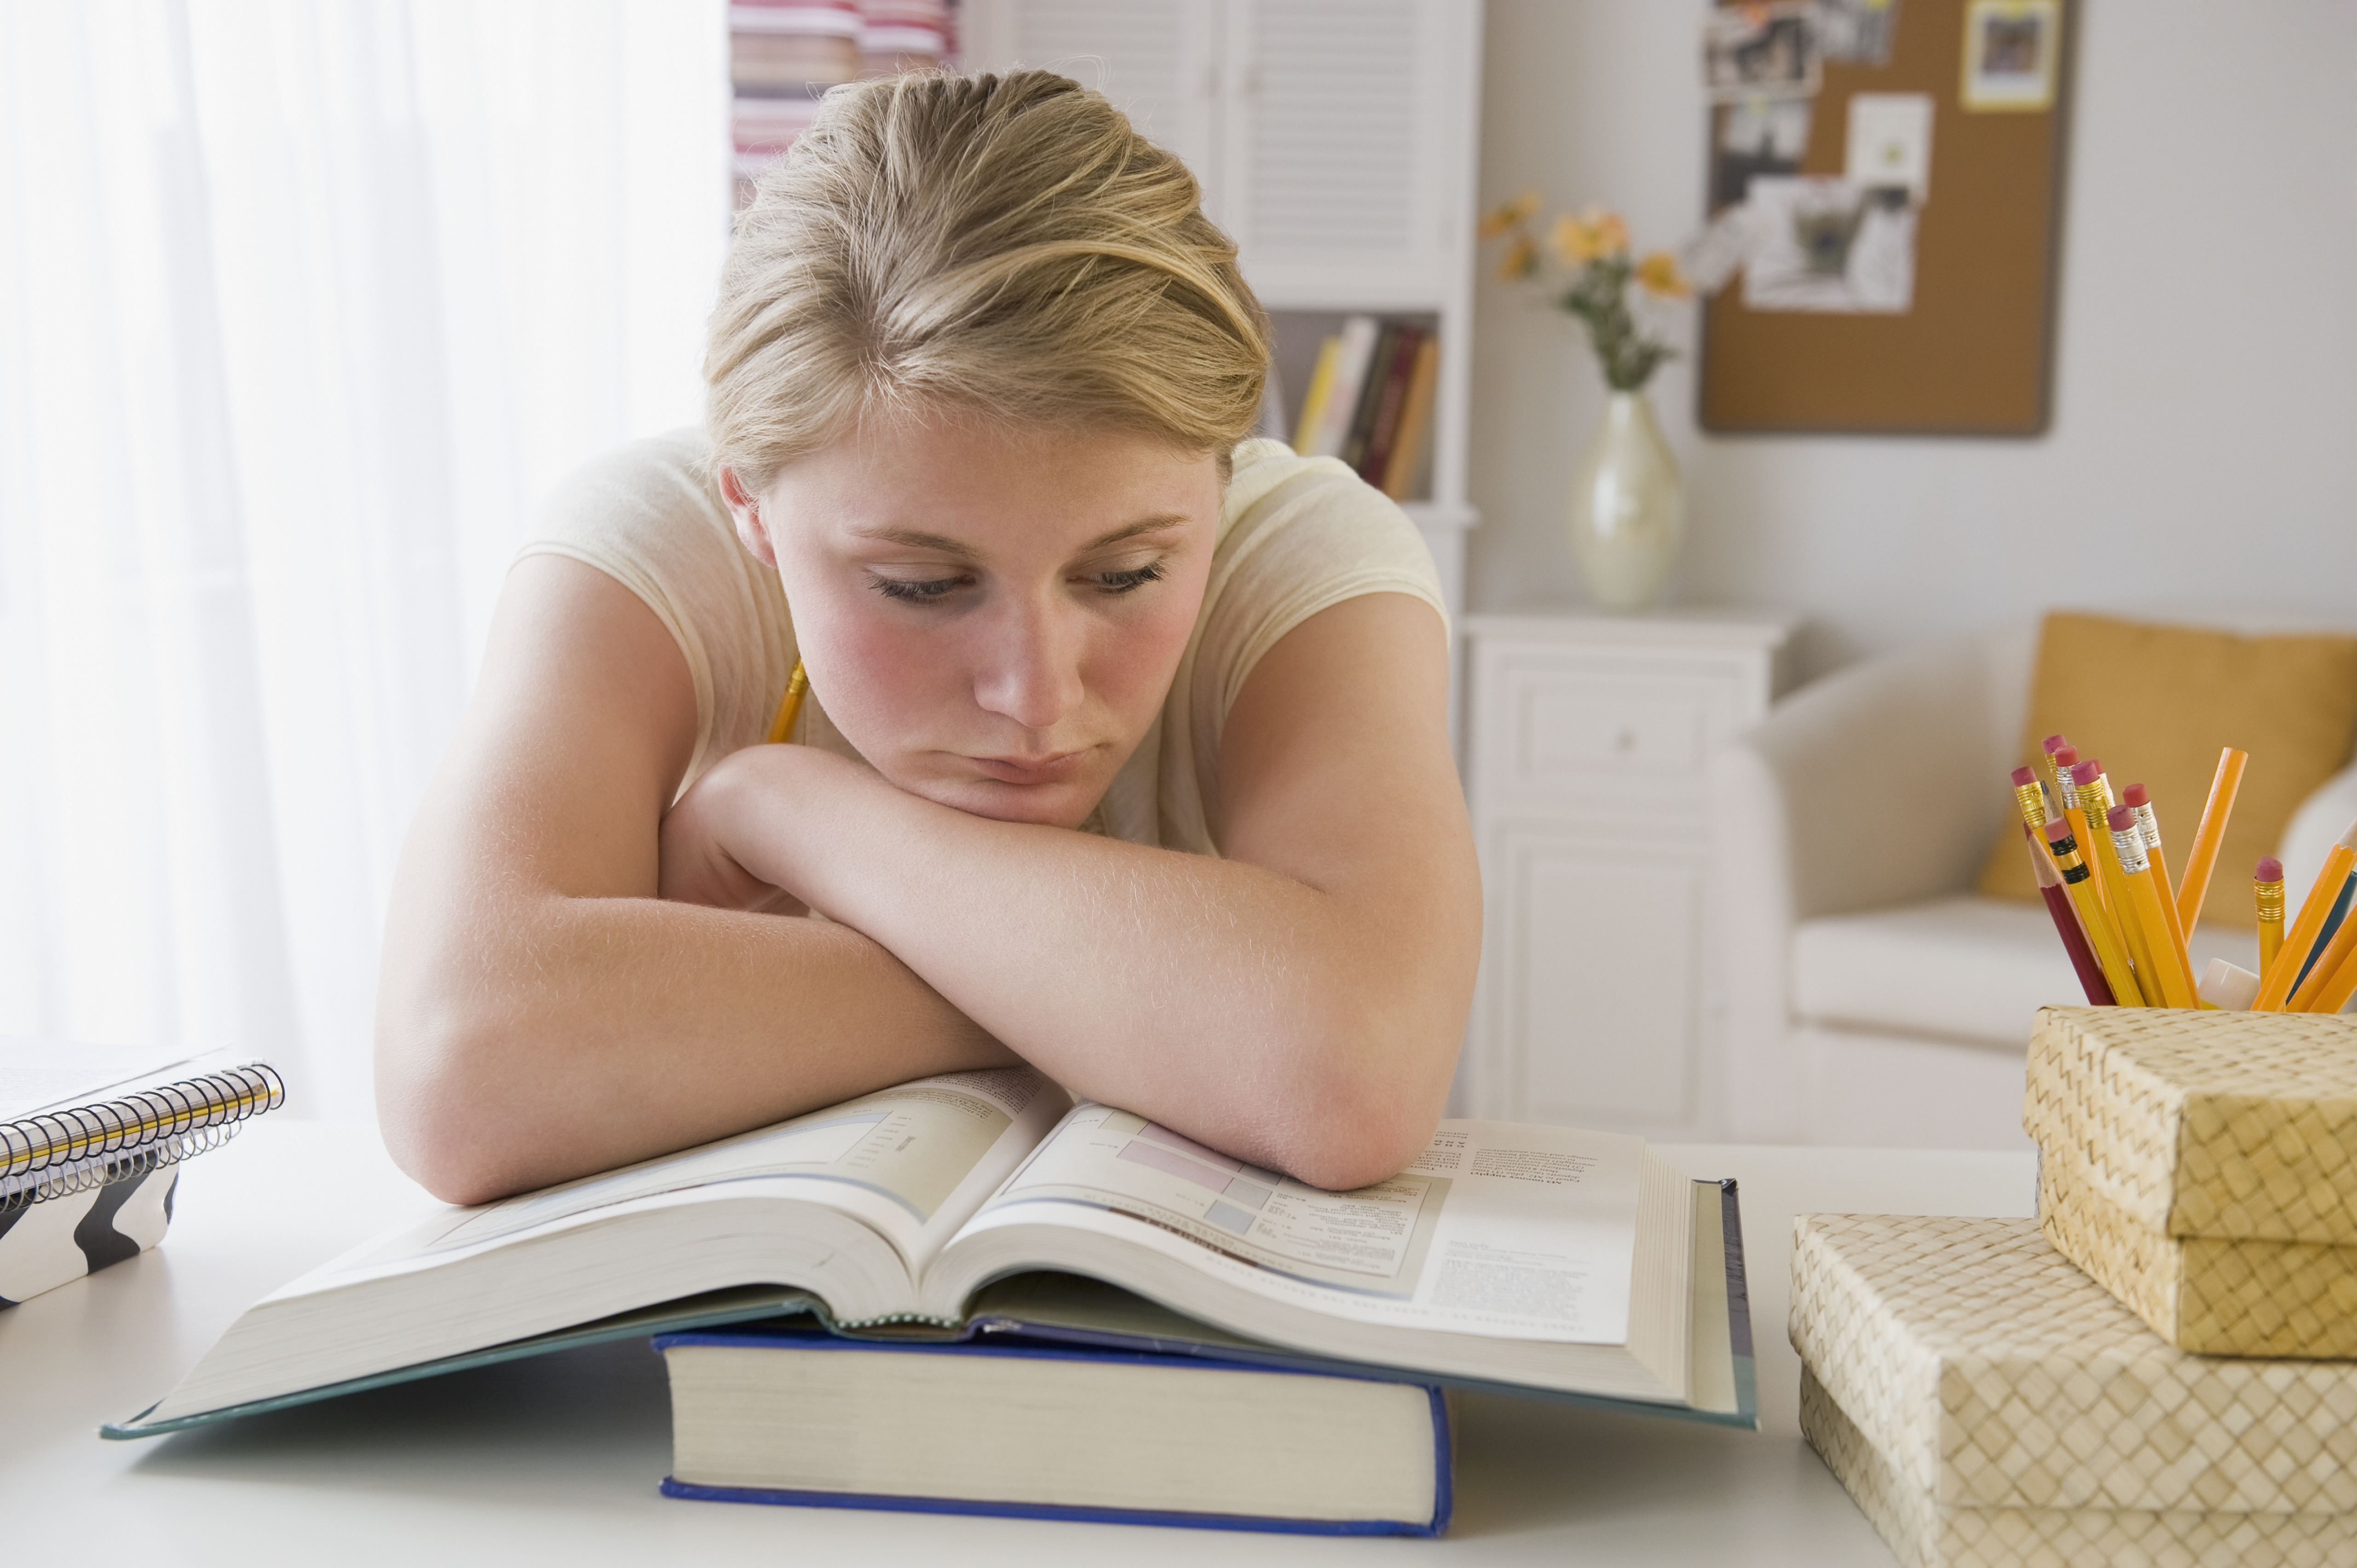 Teenaged girl doing homework | Source: Getty Images